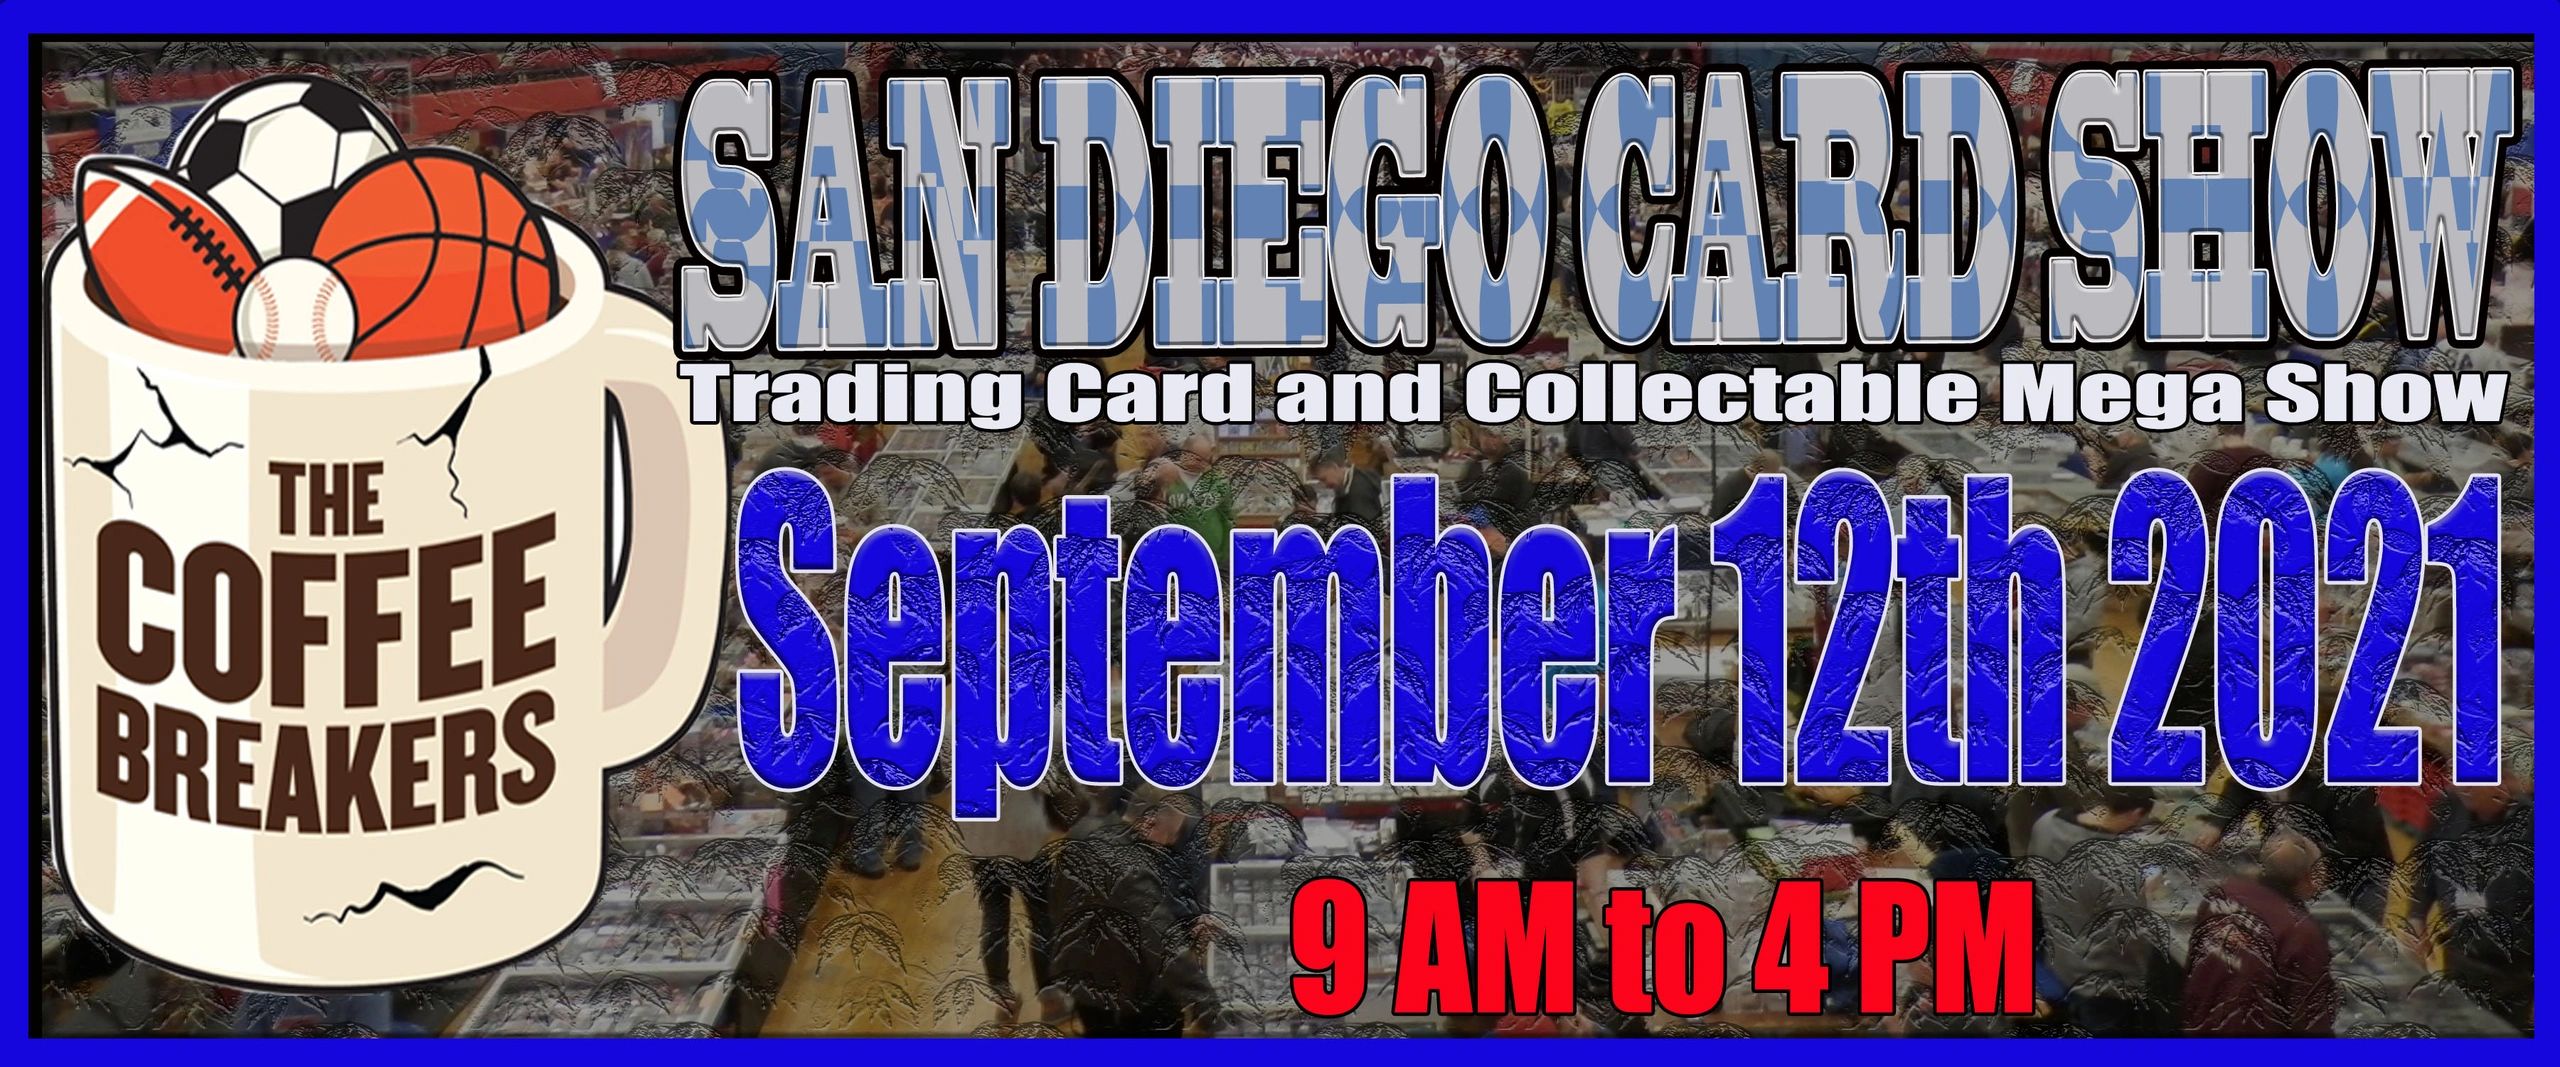 San Diego Card Show